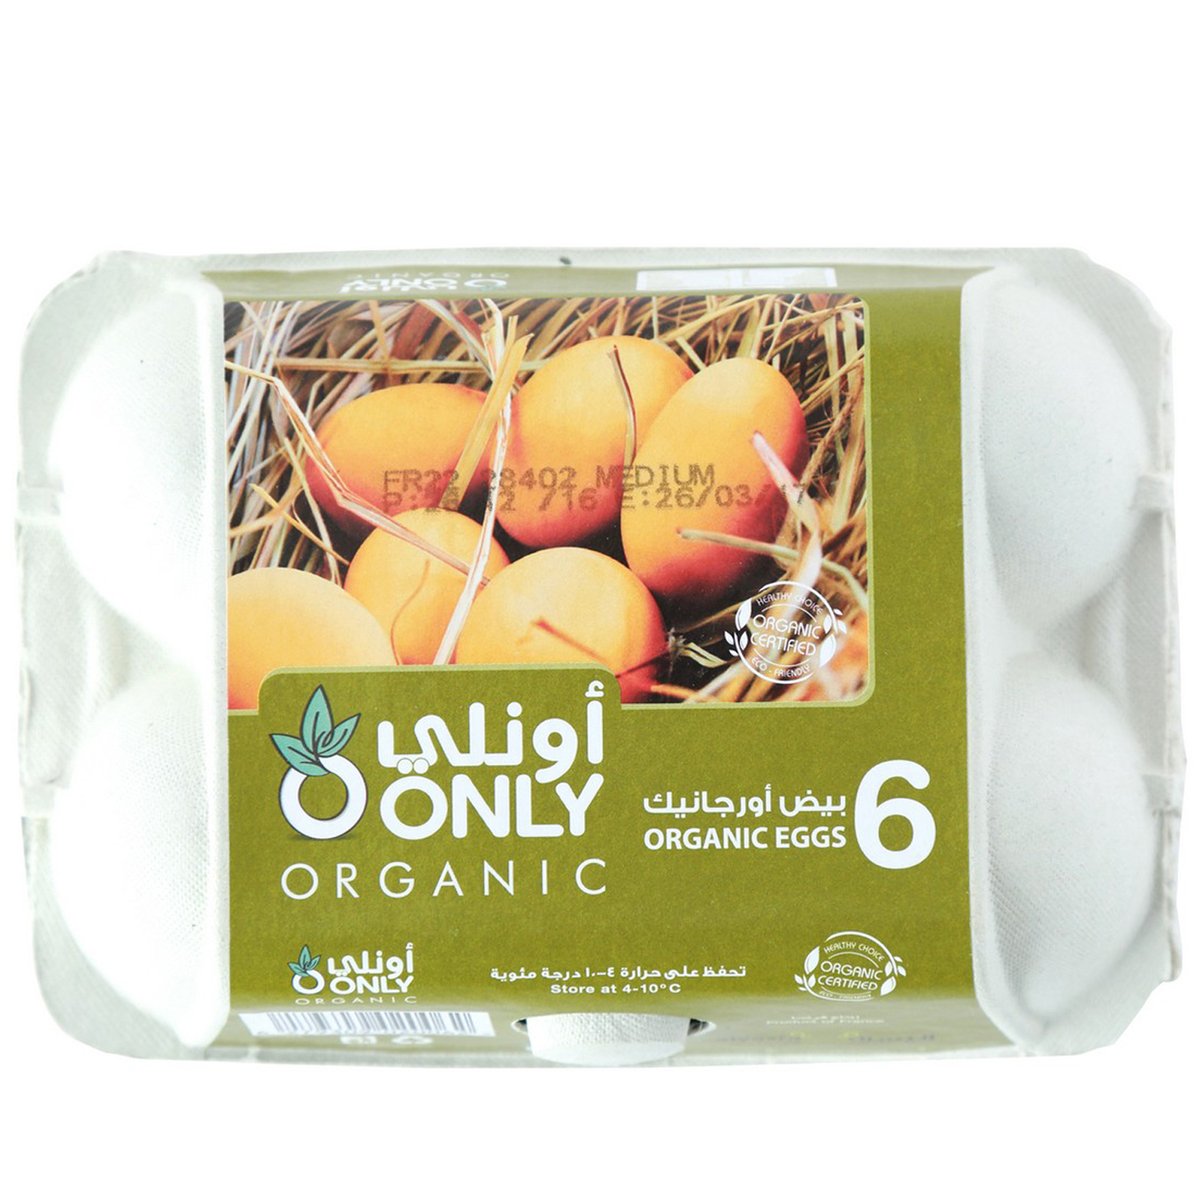 Only Organic Eggs 6pcs